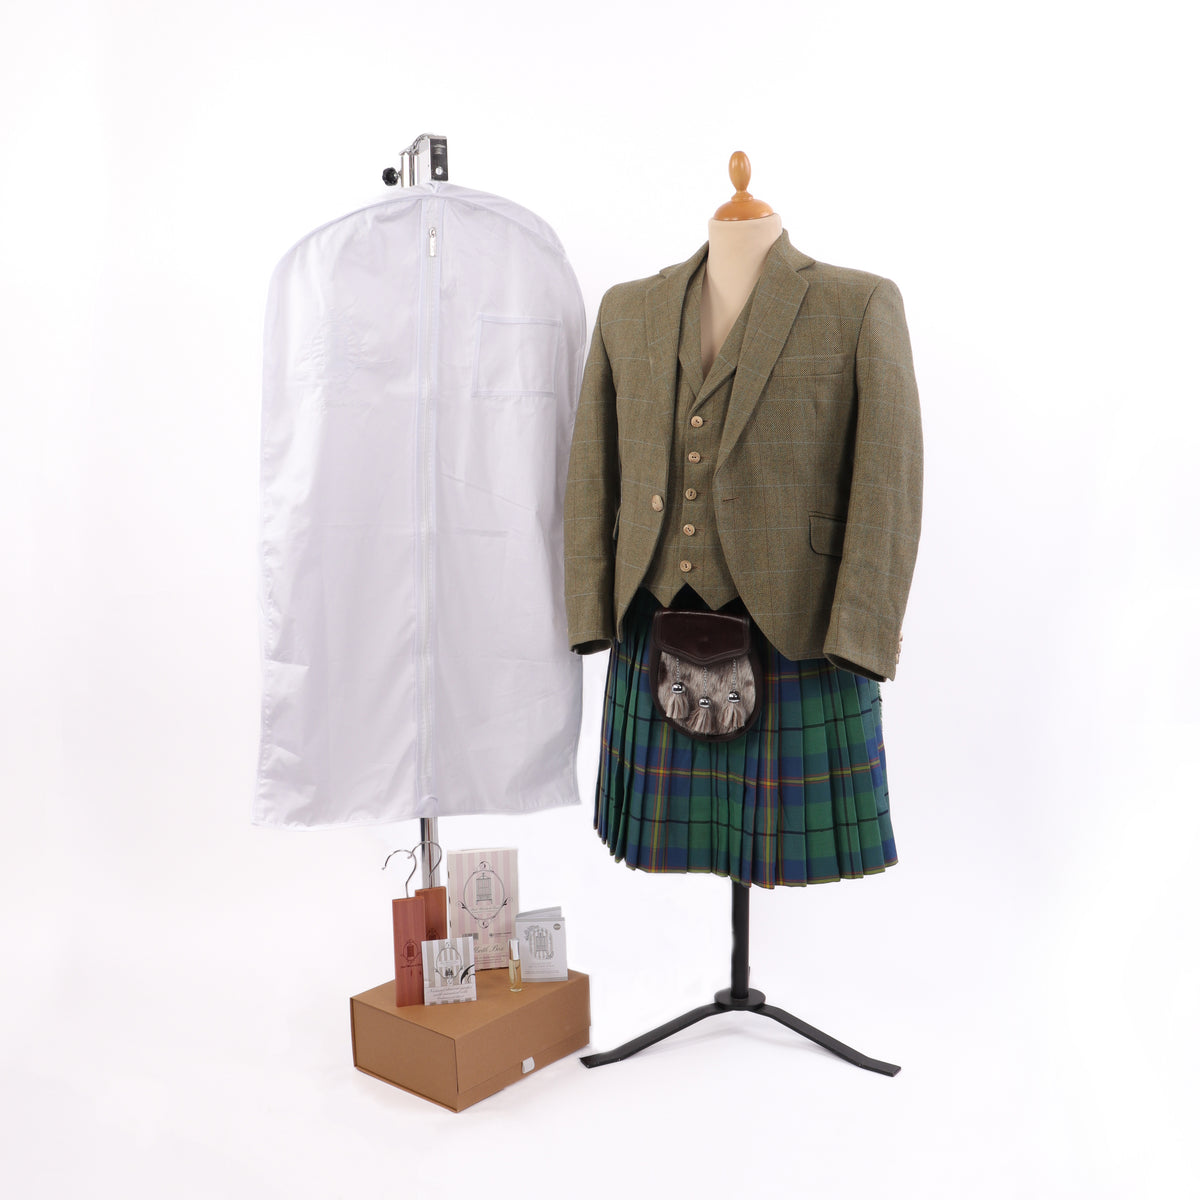 Hanging white clothing storage bag beside model stand in Scottish clothing